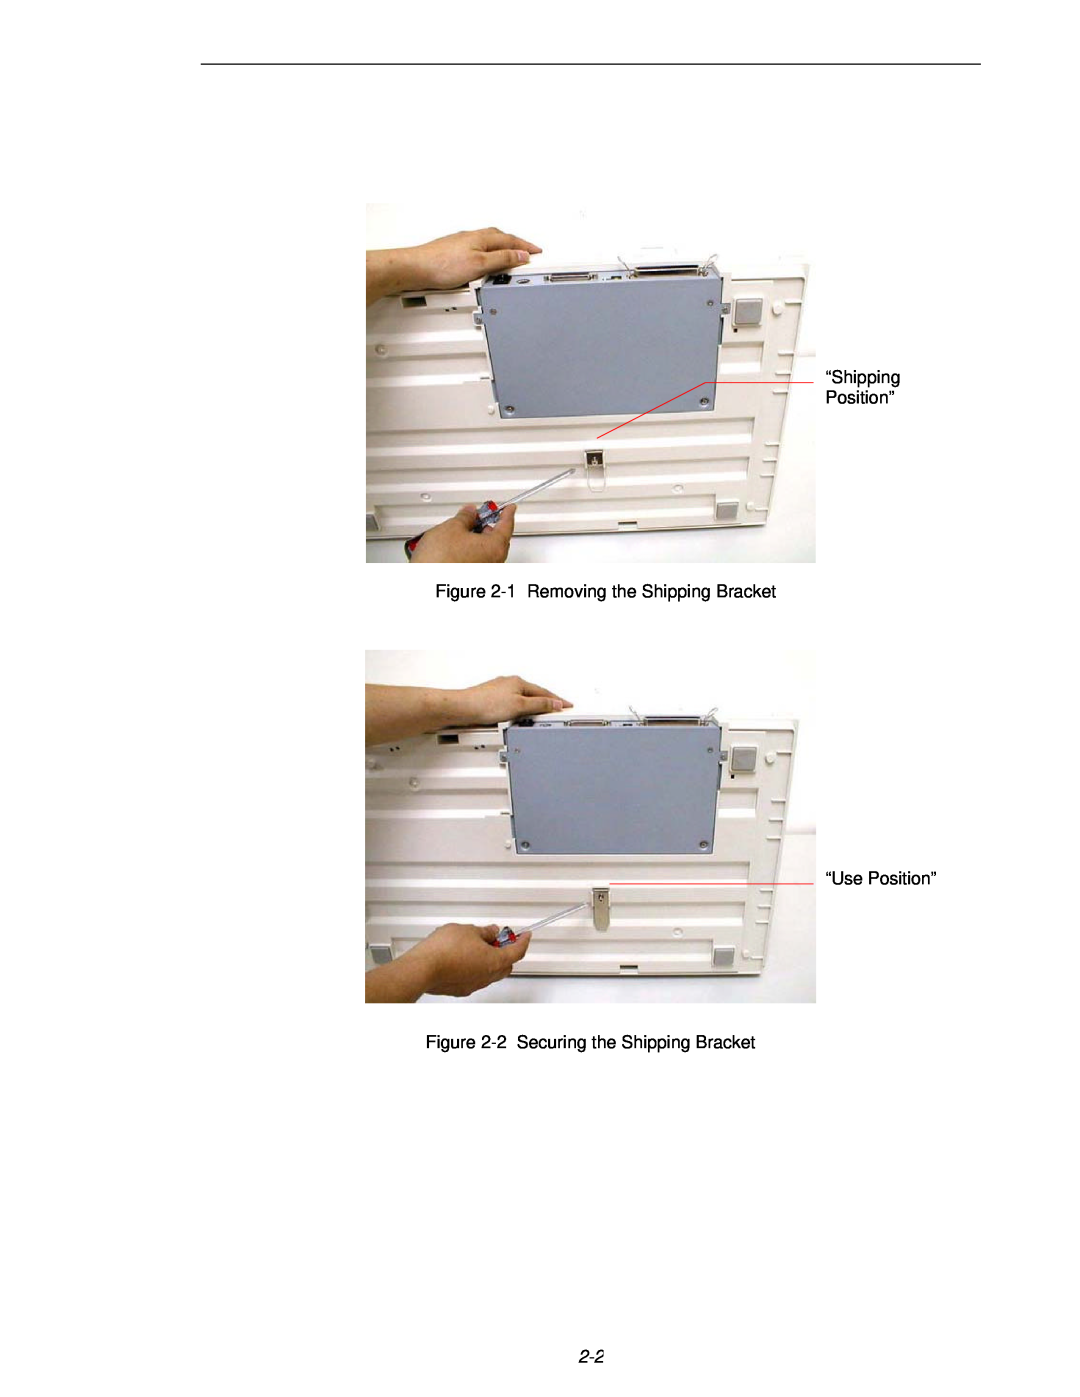 Fujitsu 620C “Shipping Position” -1 Removing the Shipping Bracket, “Use Position” -2 Securing the Shipping Bracket 